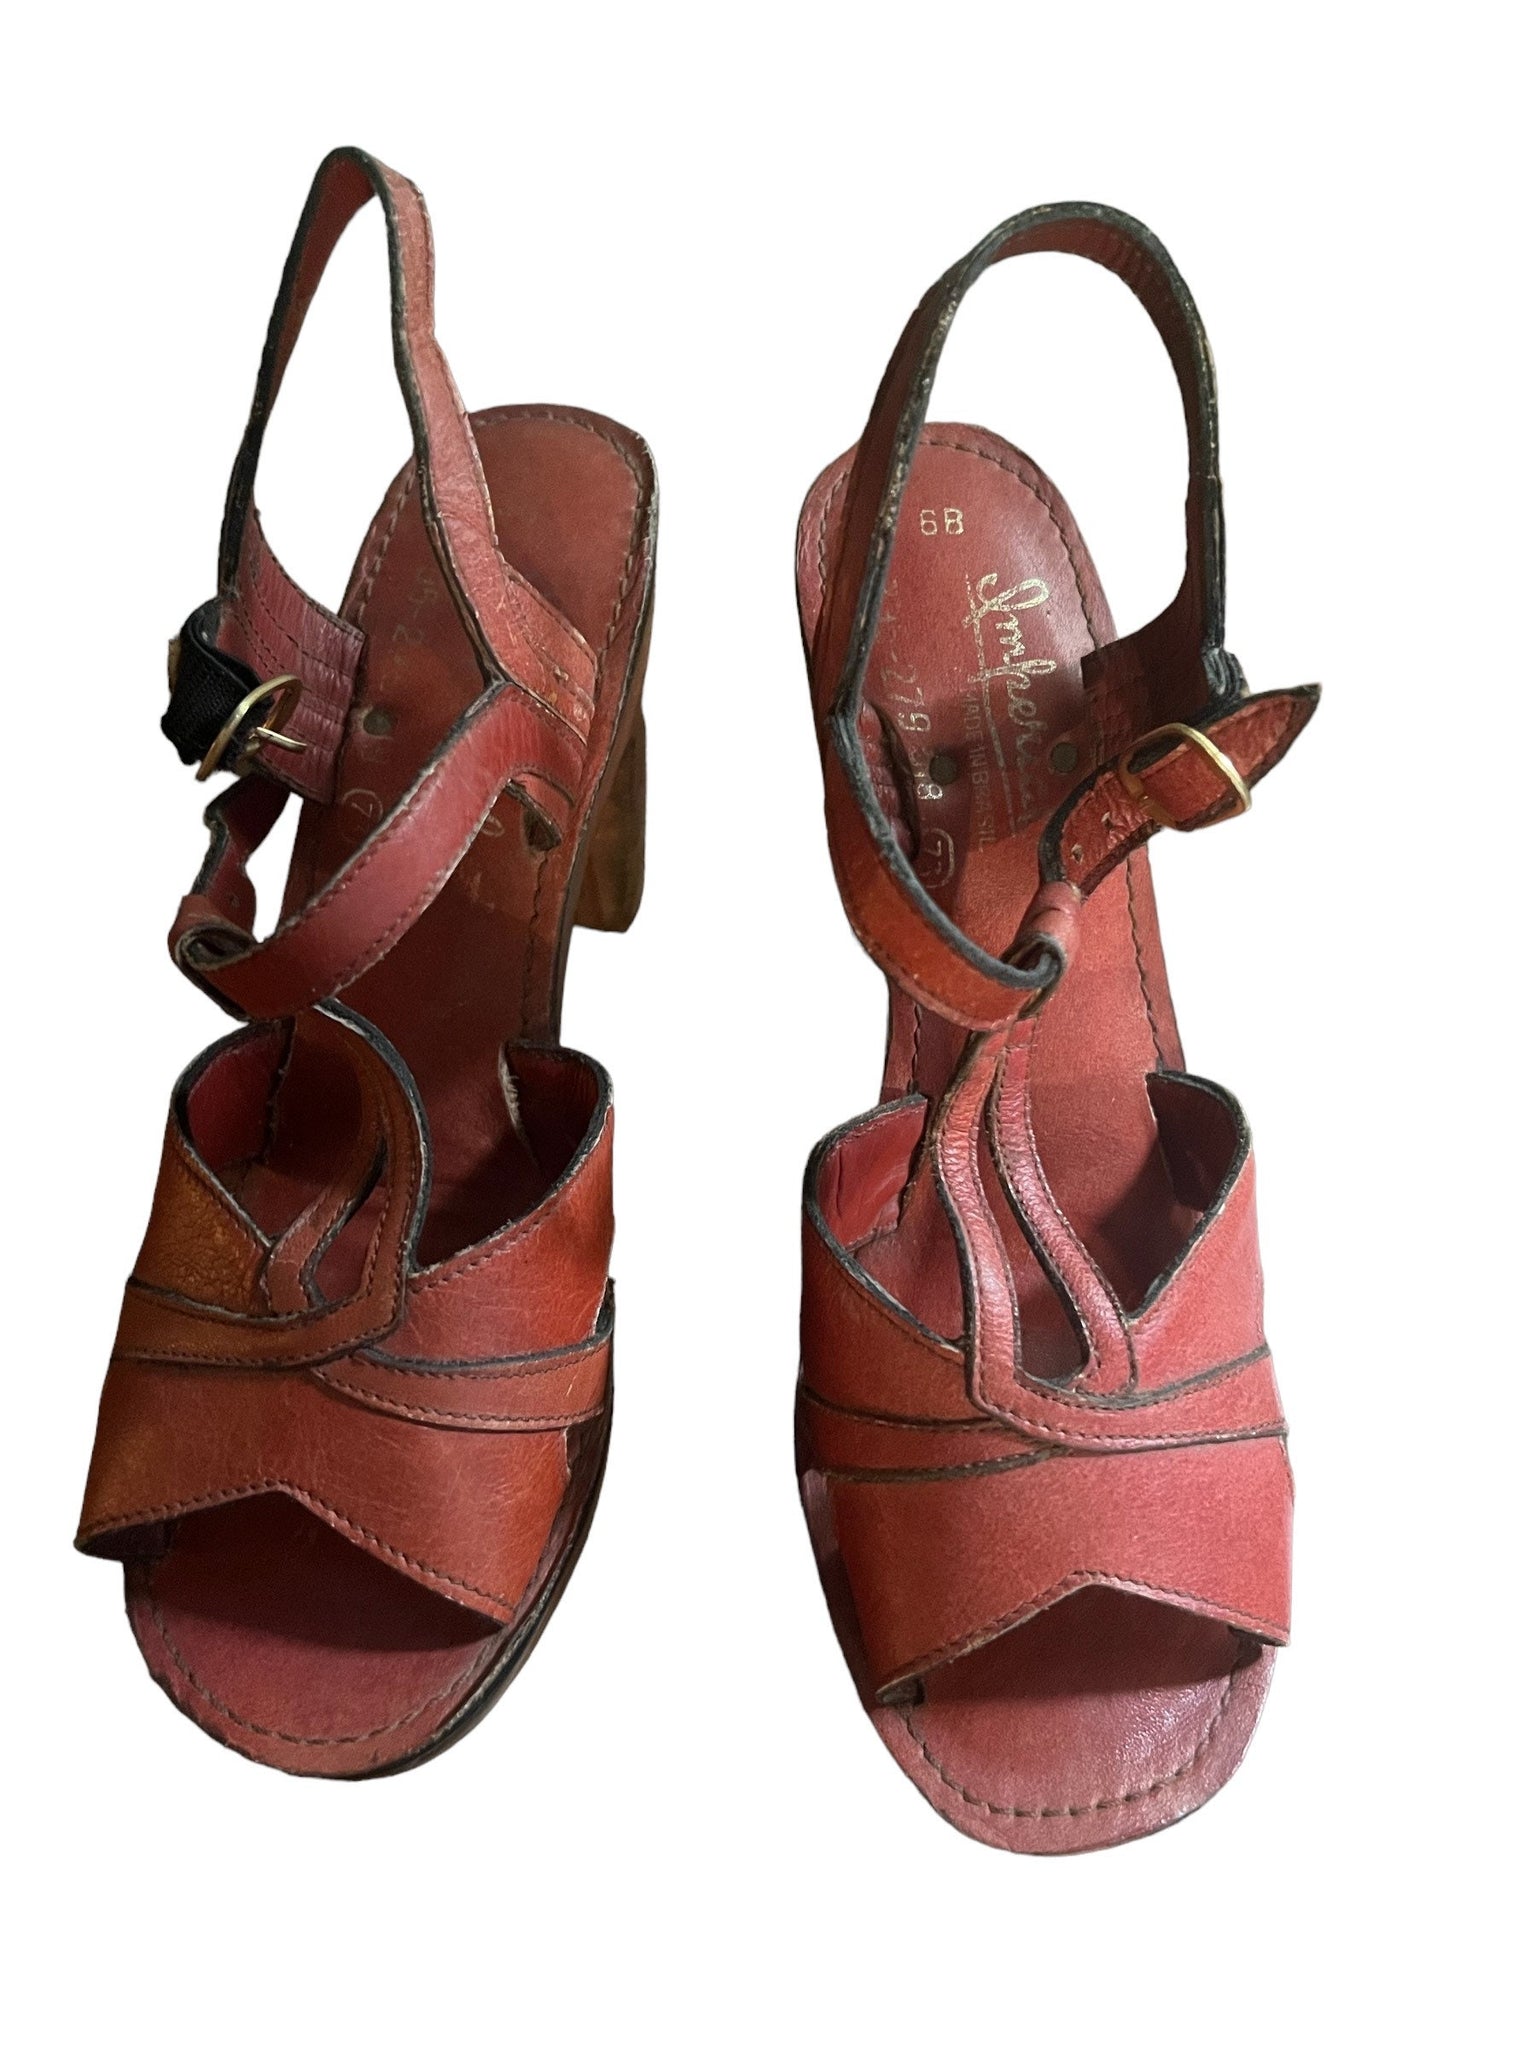 Vintage Imperial 70's wood platform shoes 6 B